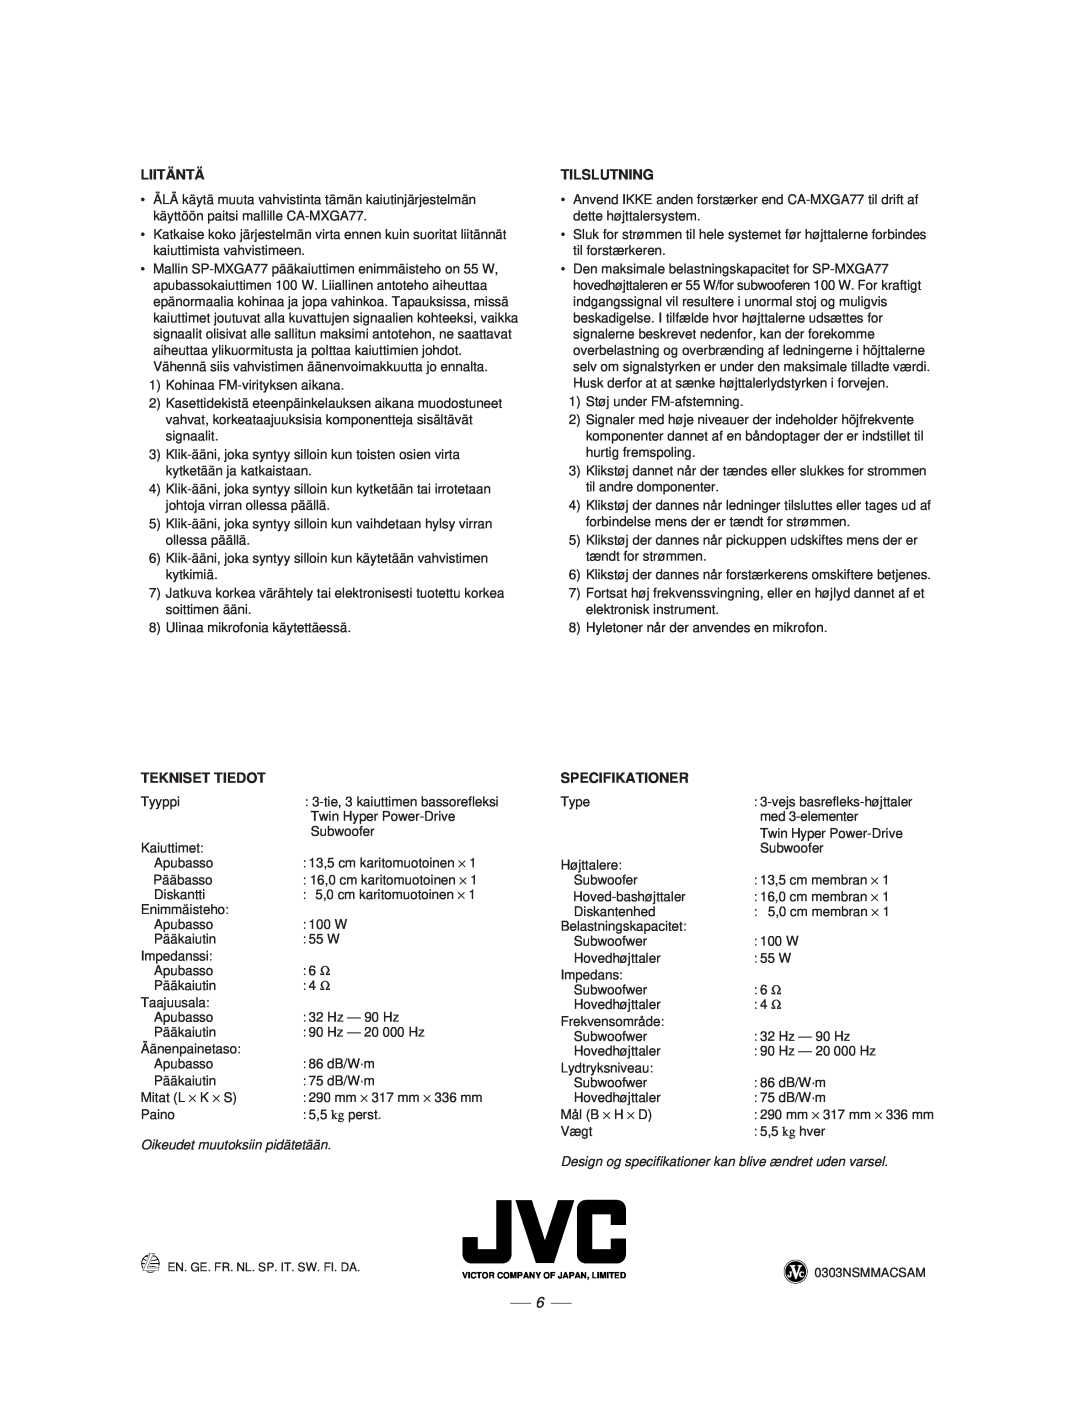 JVC CA-MXGT88, CA-MXGA77 manual Liitäntä, Tilslutning, Tekniset Tiedot, Specifikationer 